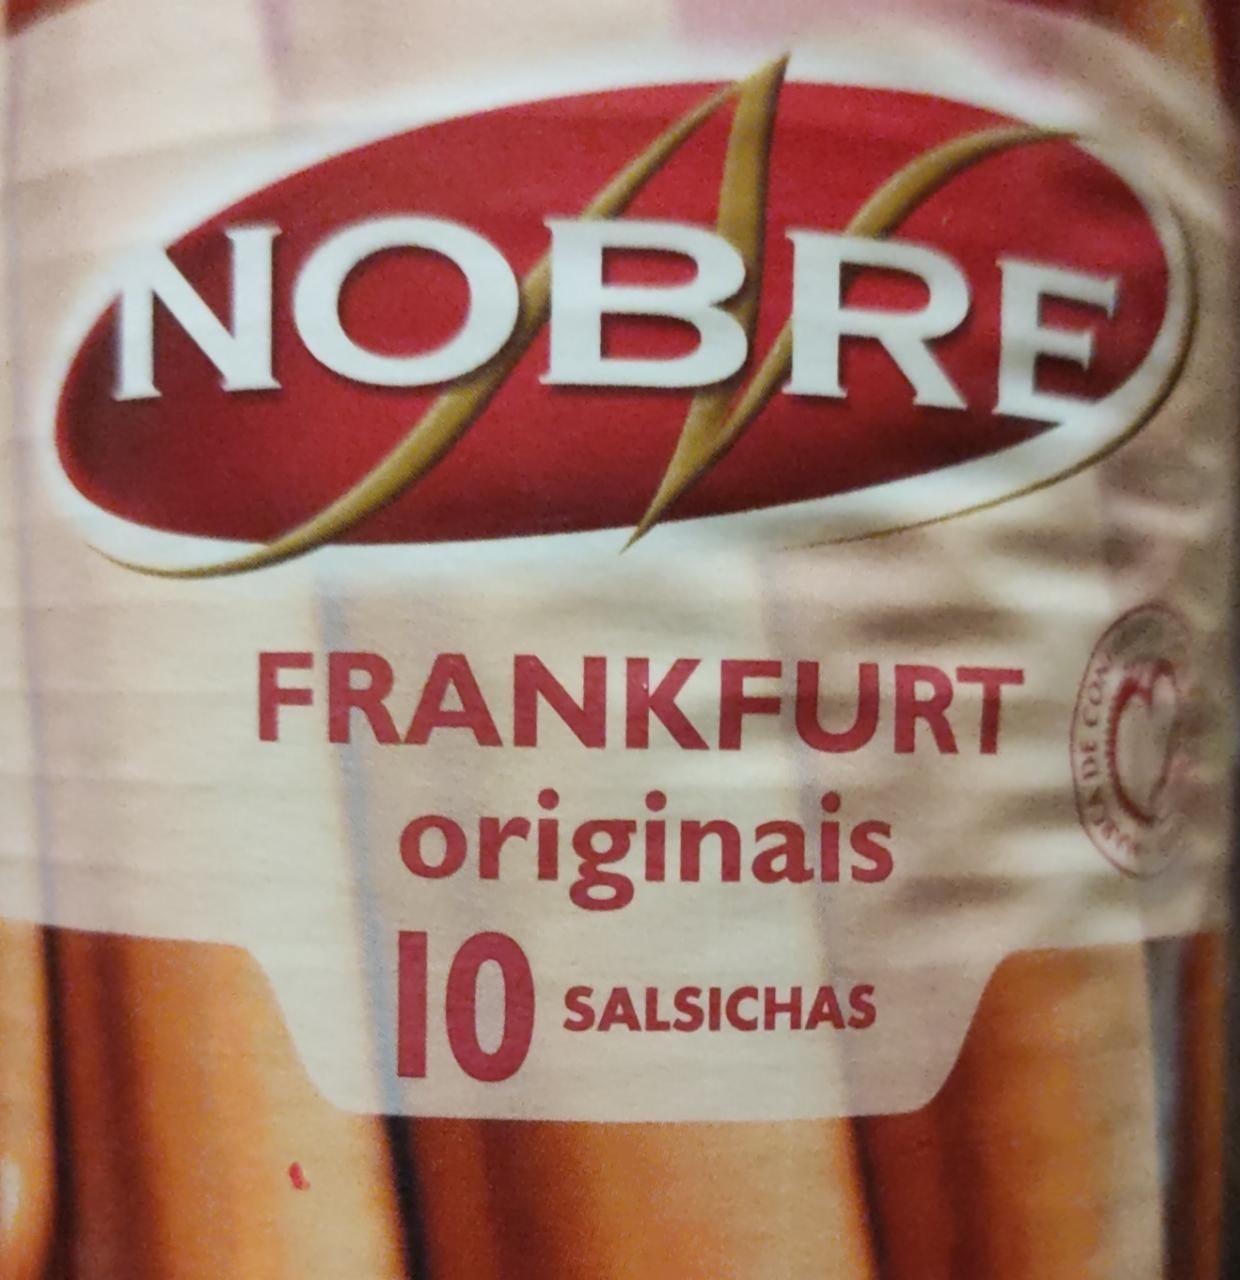 Фото - Frankfurt originais 10 Salsichas Nobre